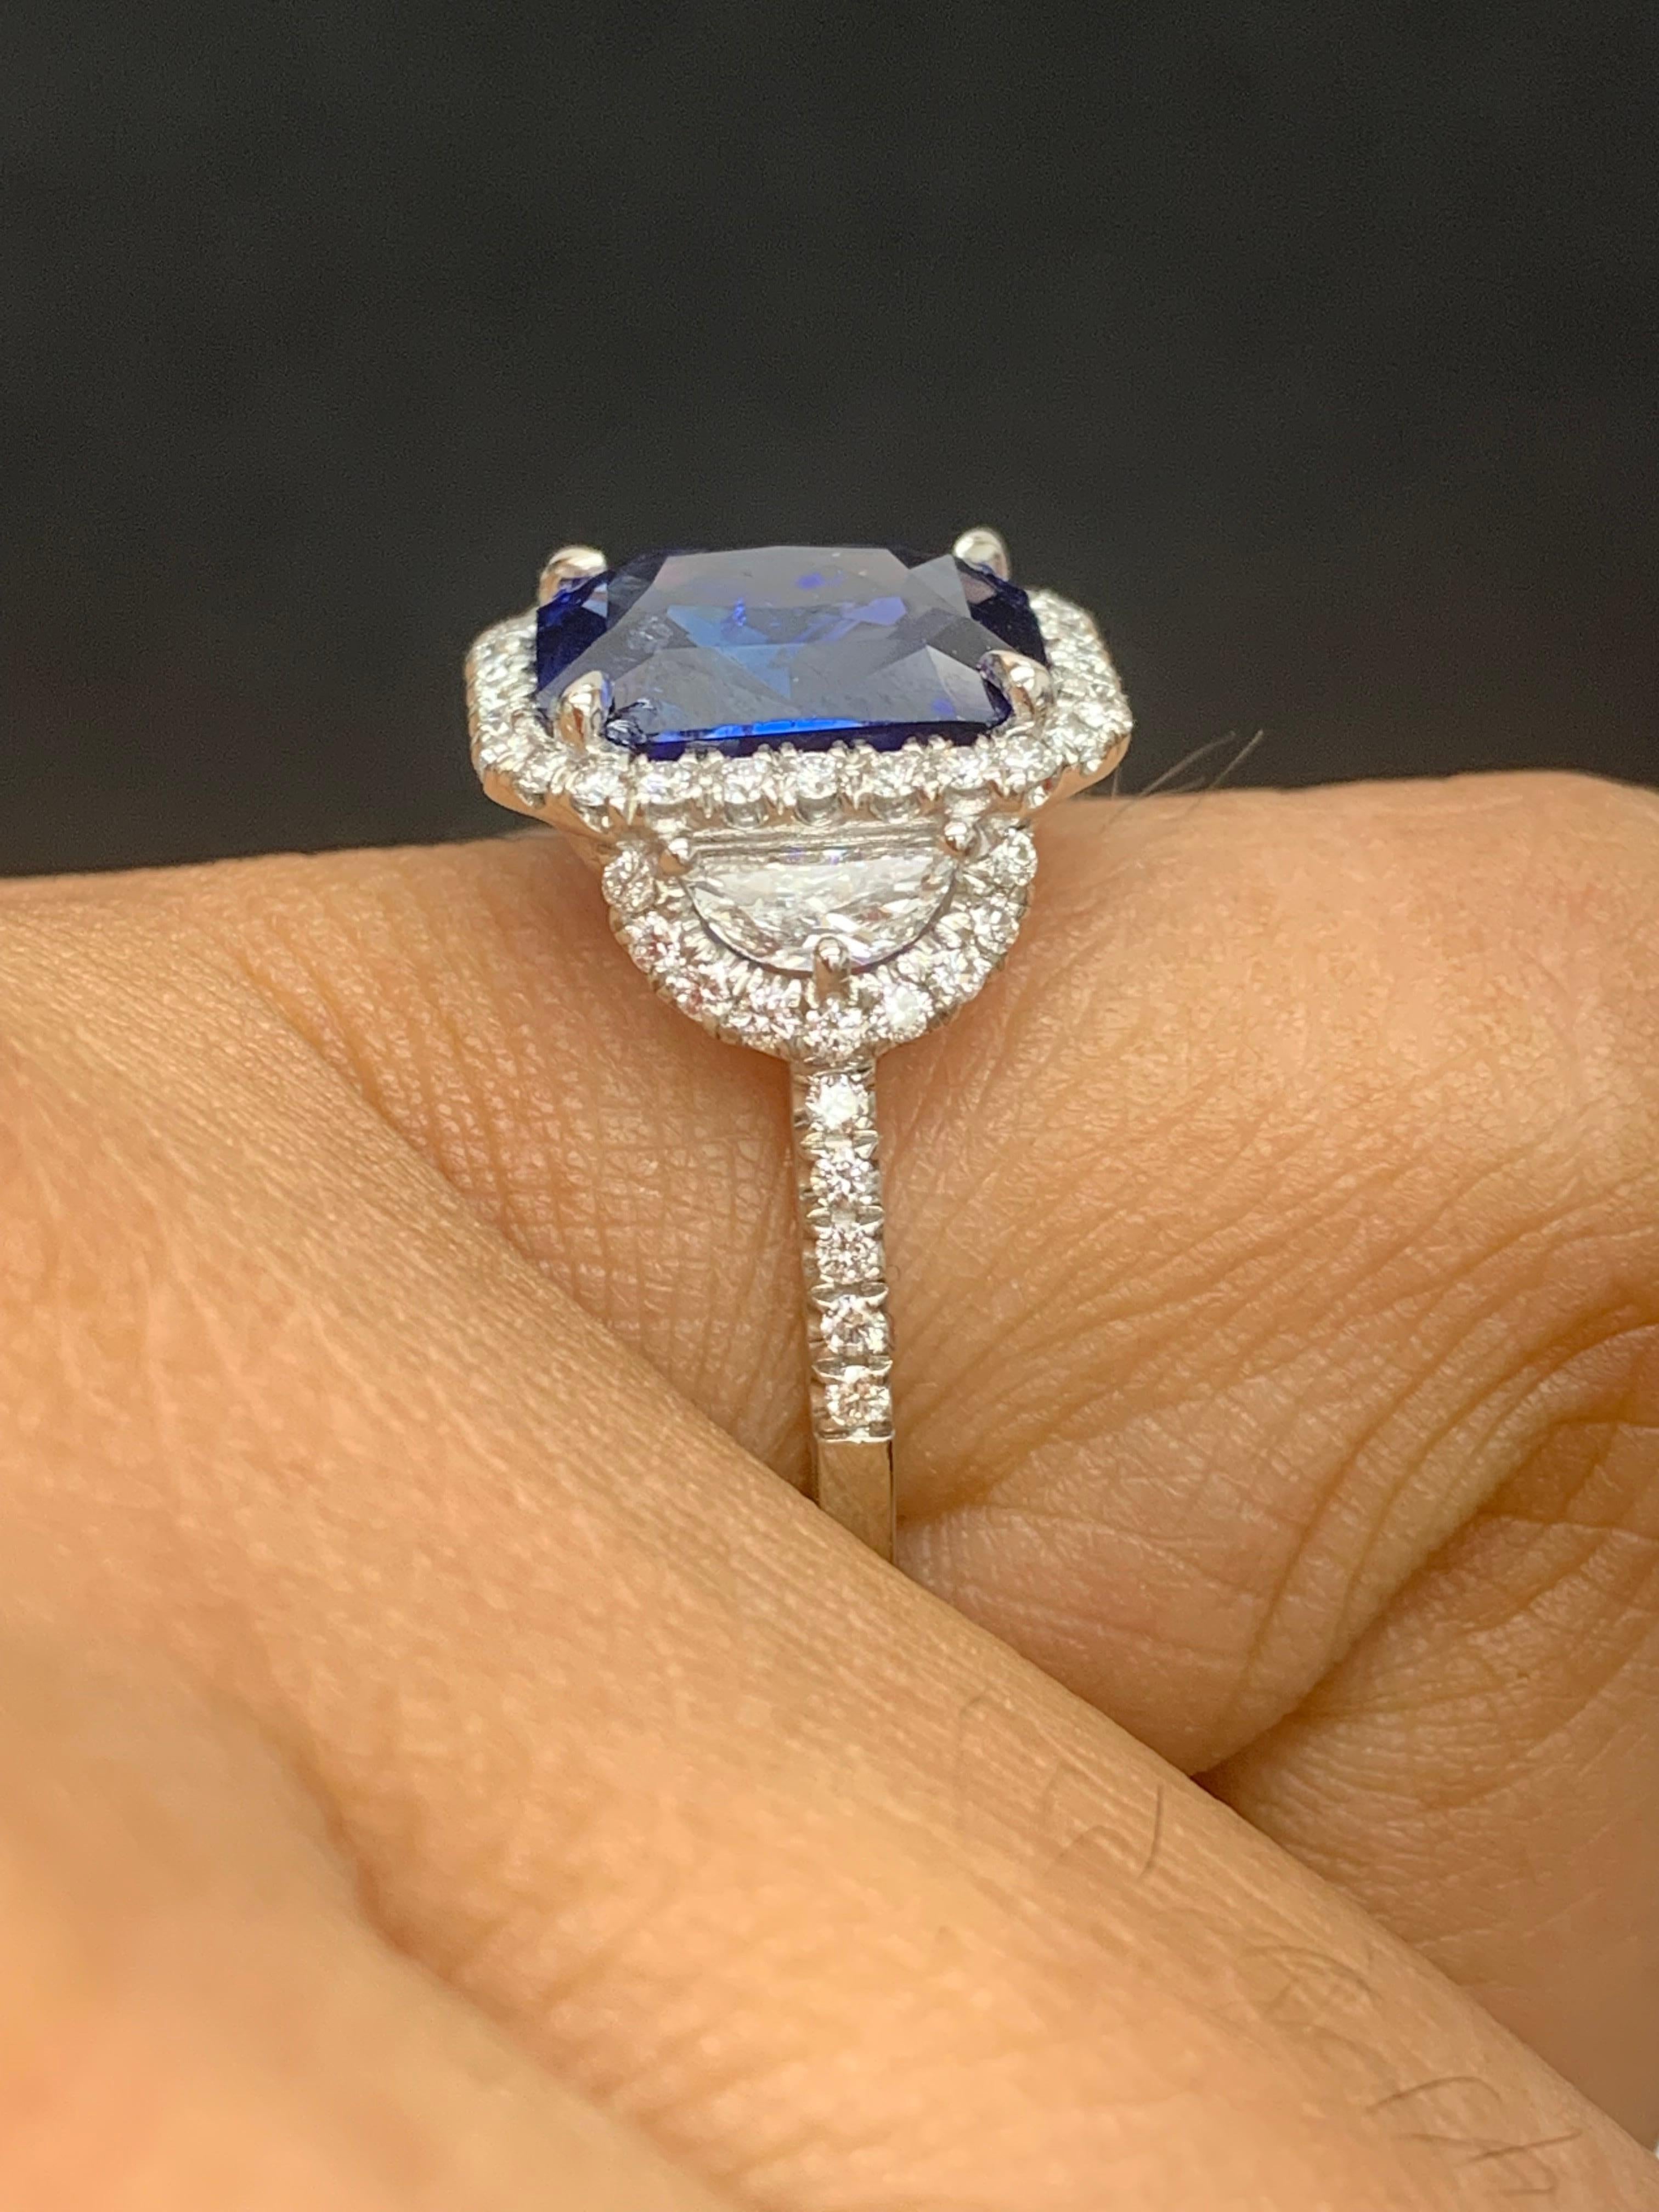 GIA Certified 4.41 Carat Emerald Cut Sapphire Diamond 3 Stone Ring in Platinum For Sale 1